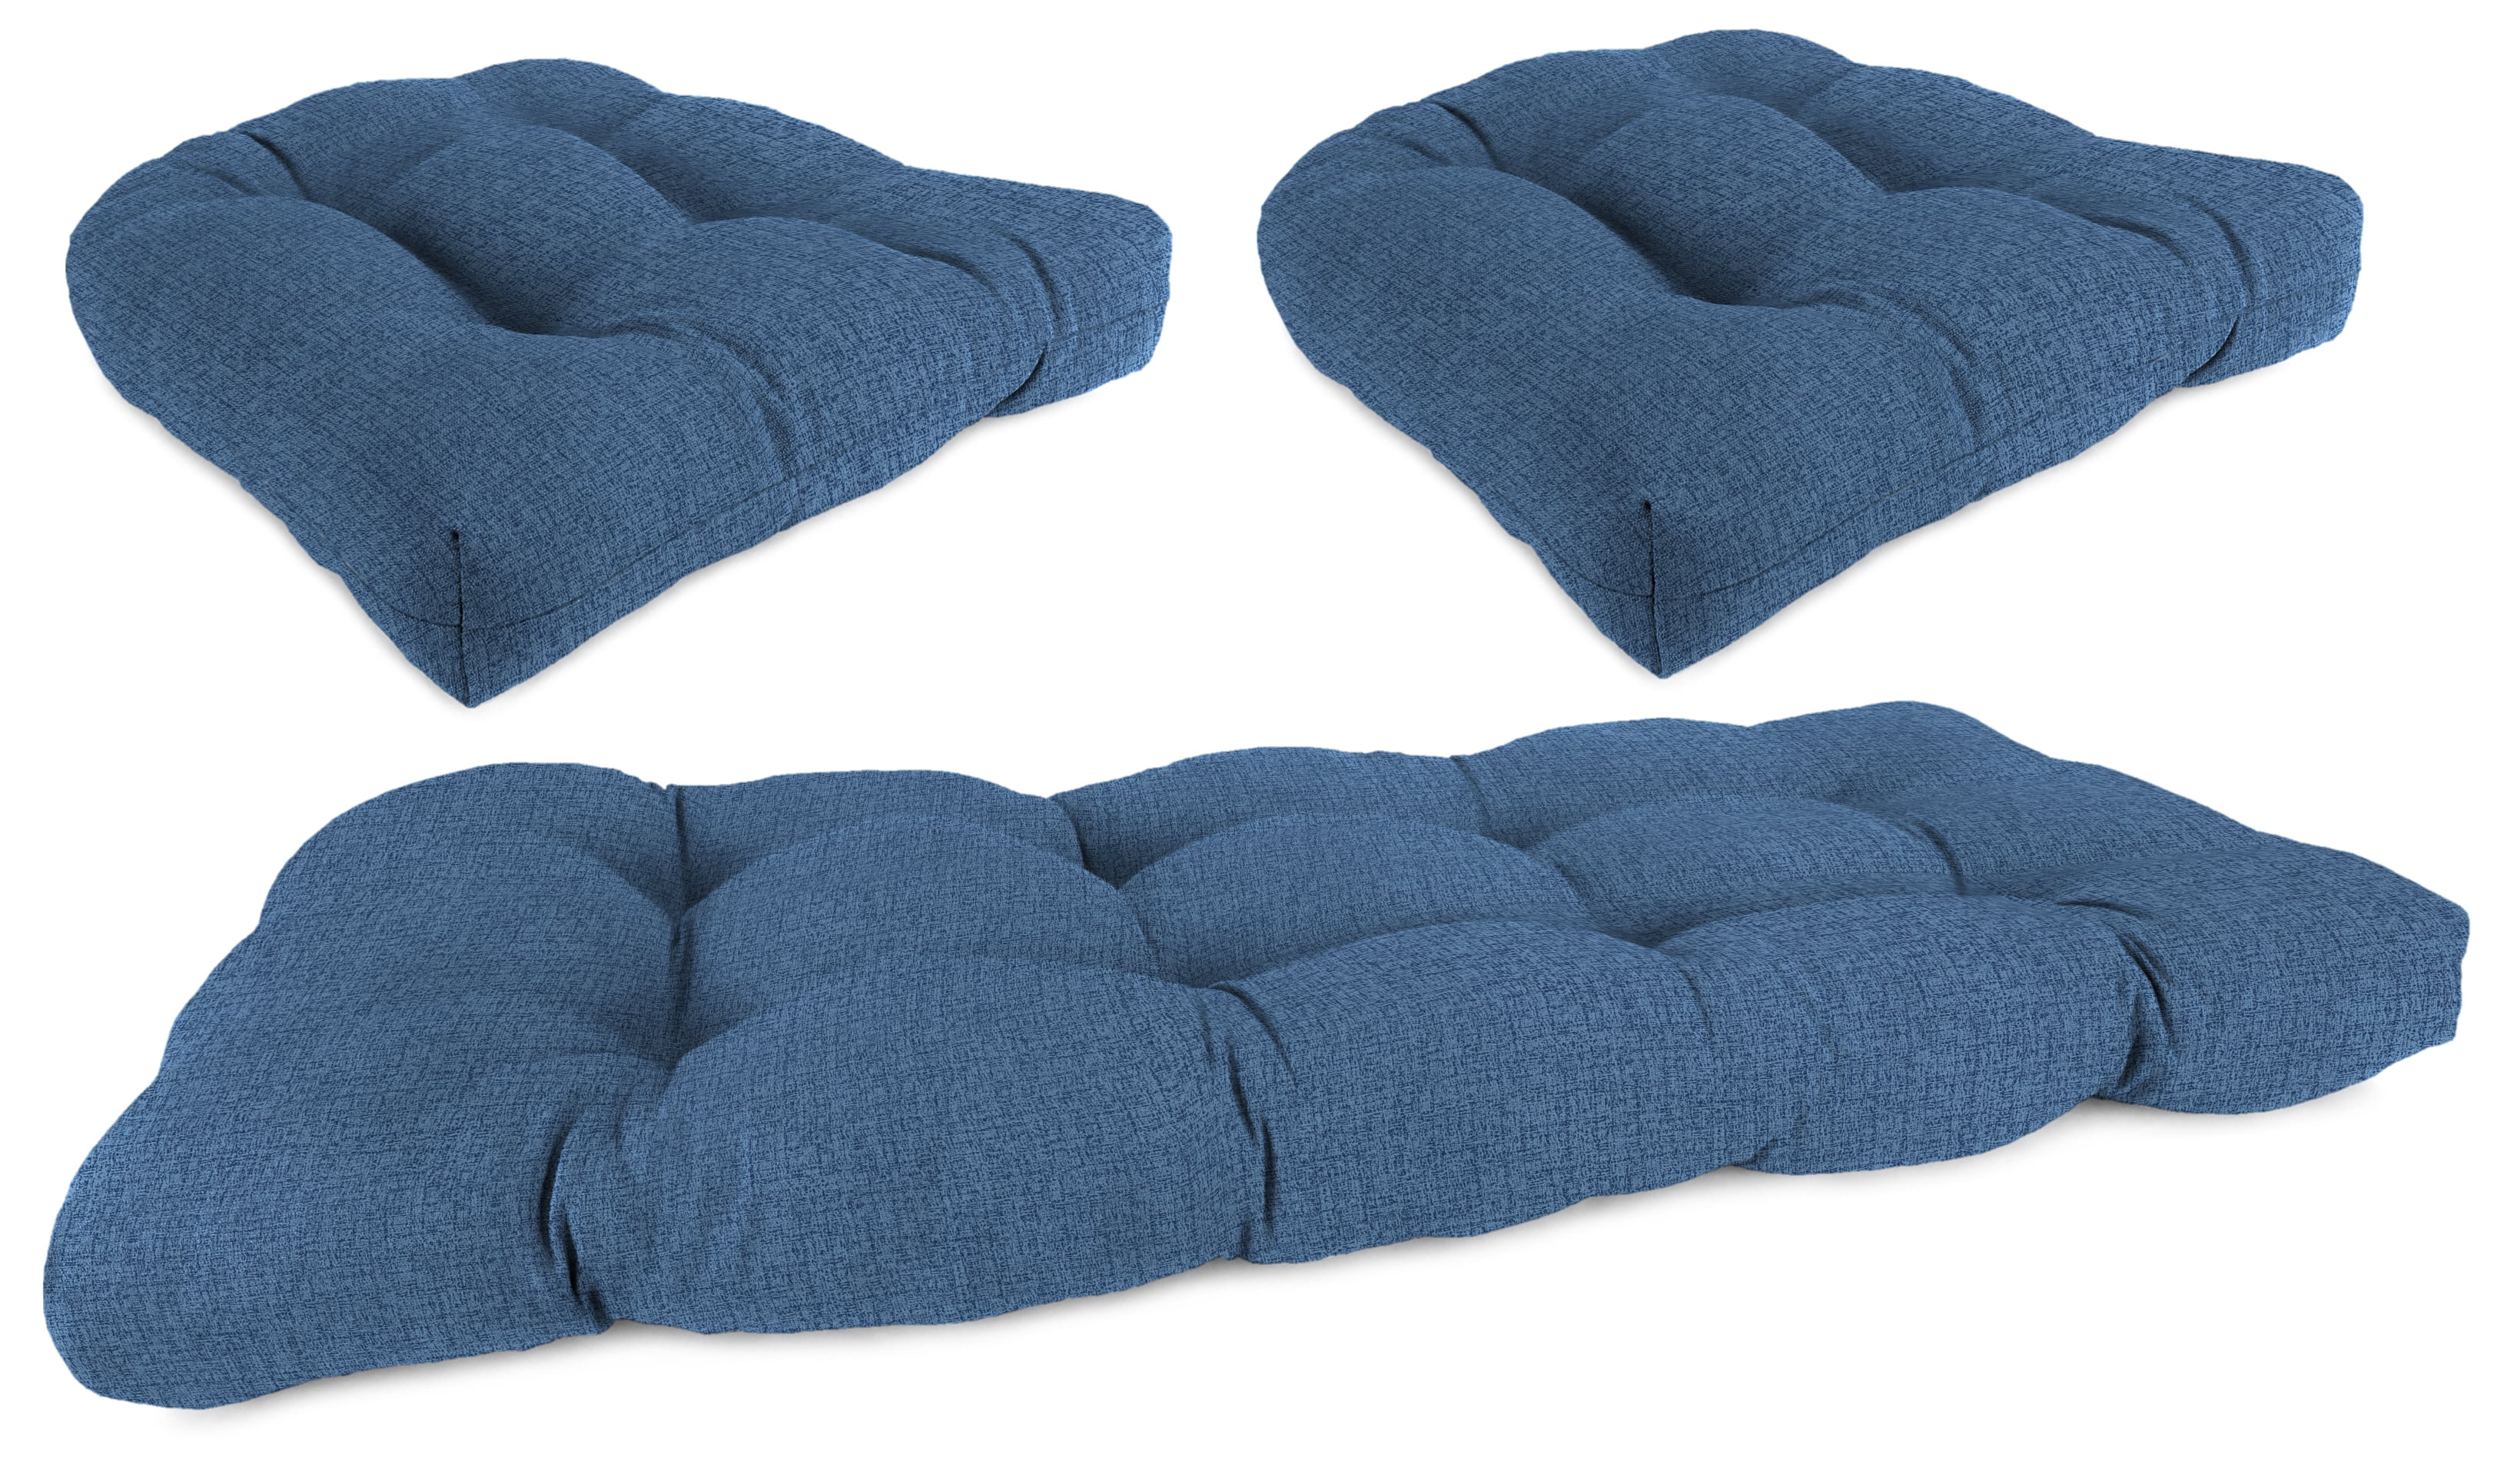 Tufted Wool Seat Cushion